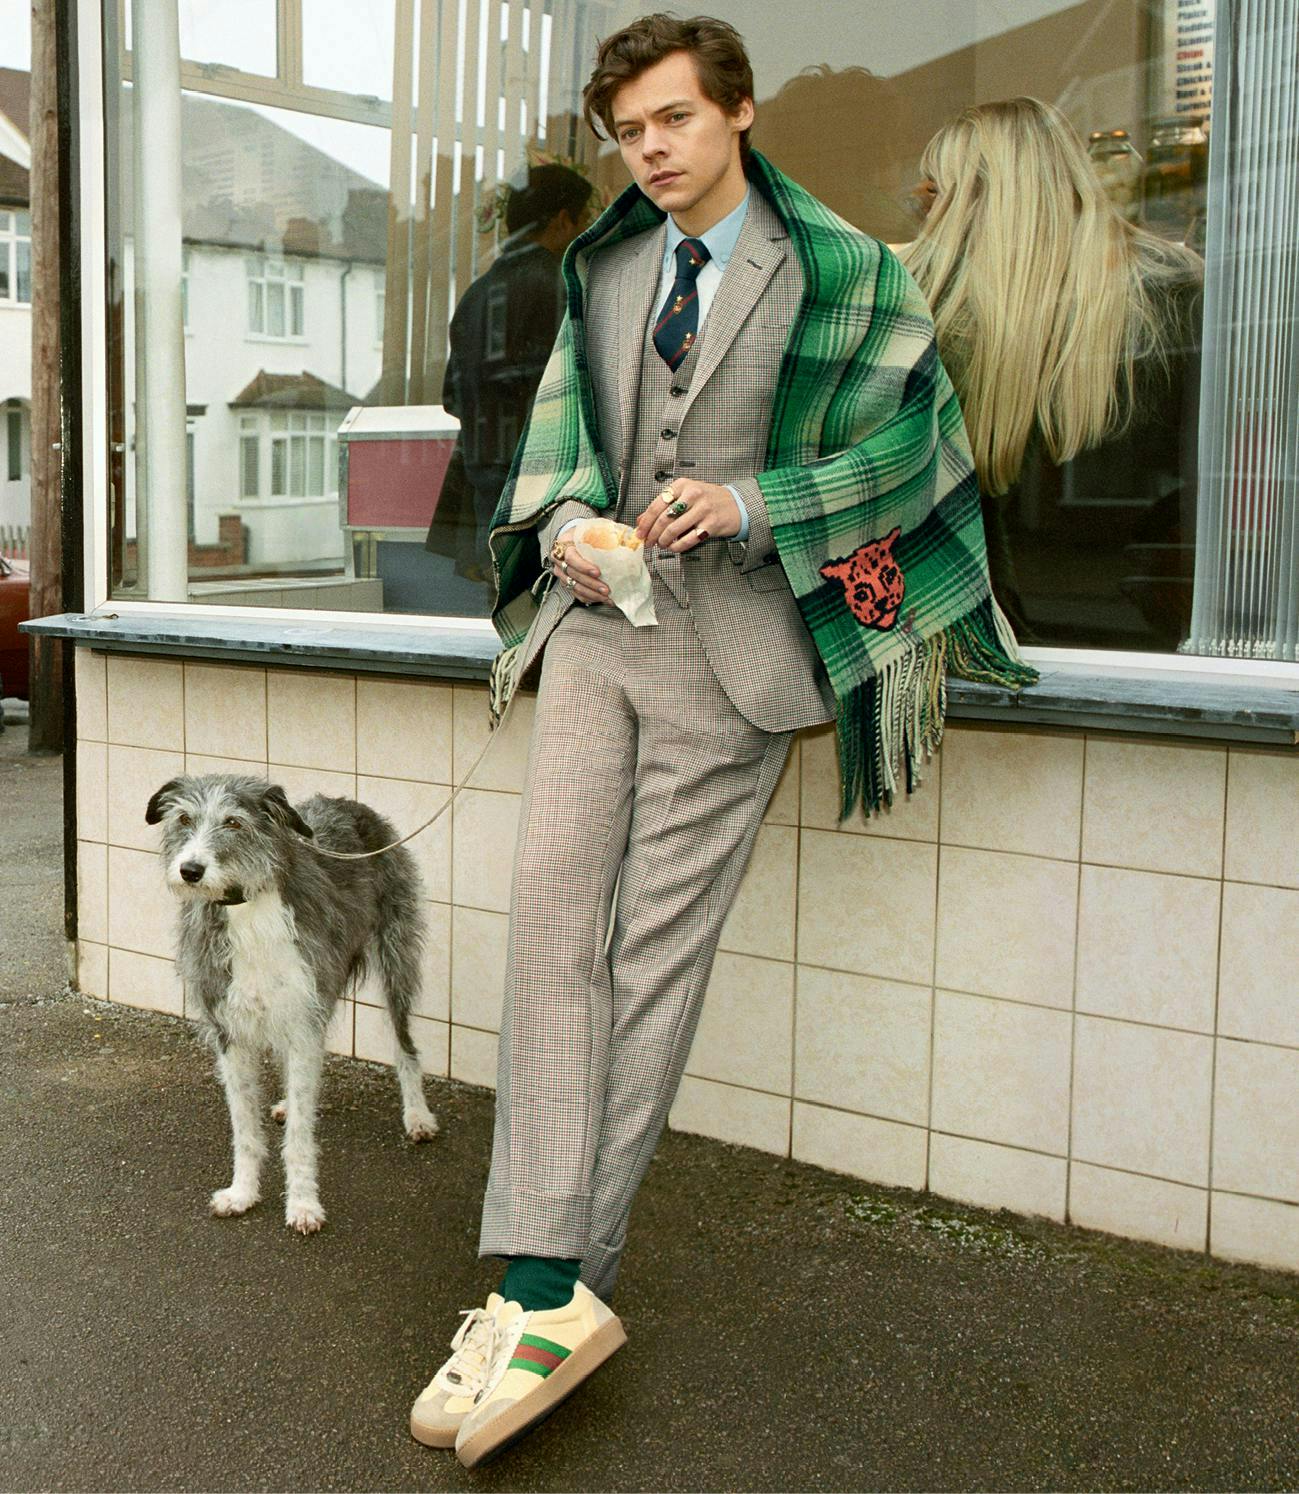 clothing shoe footwear dog person overcoat coat pants suit home decor